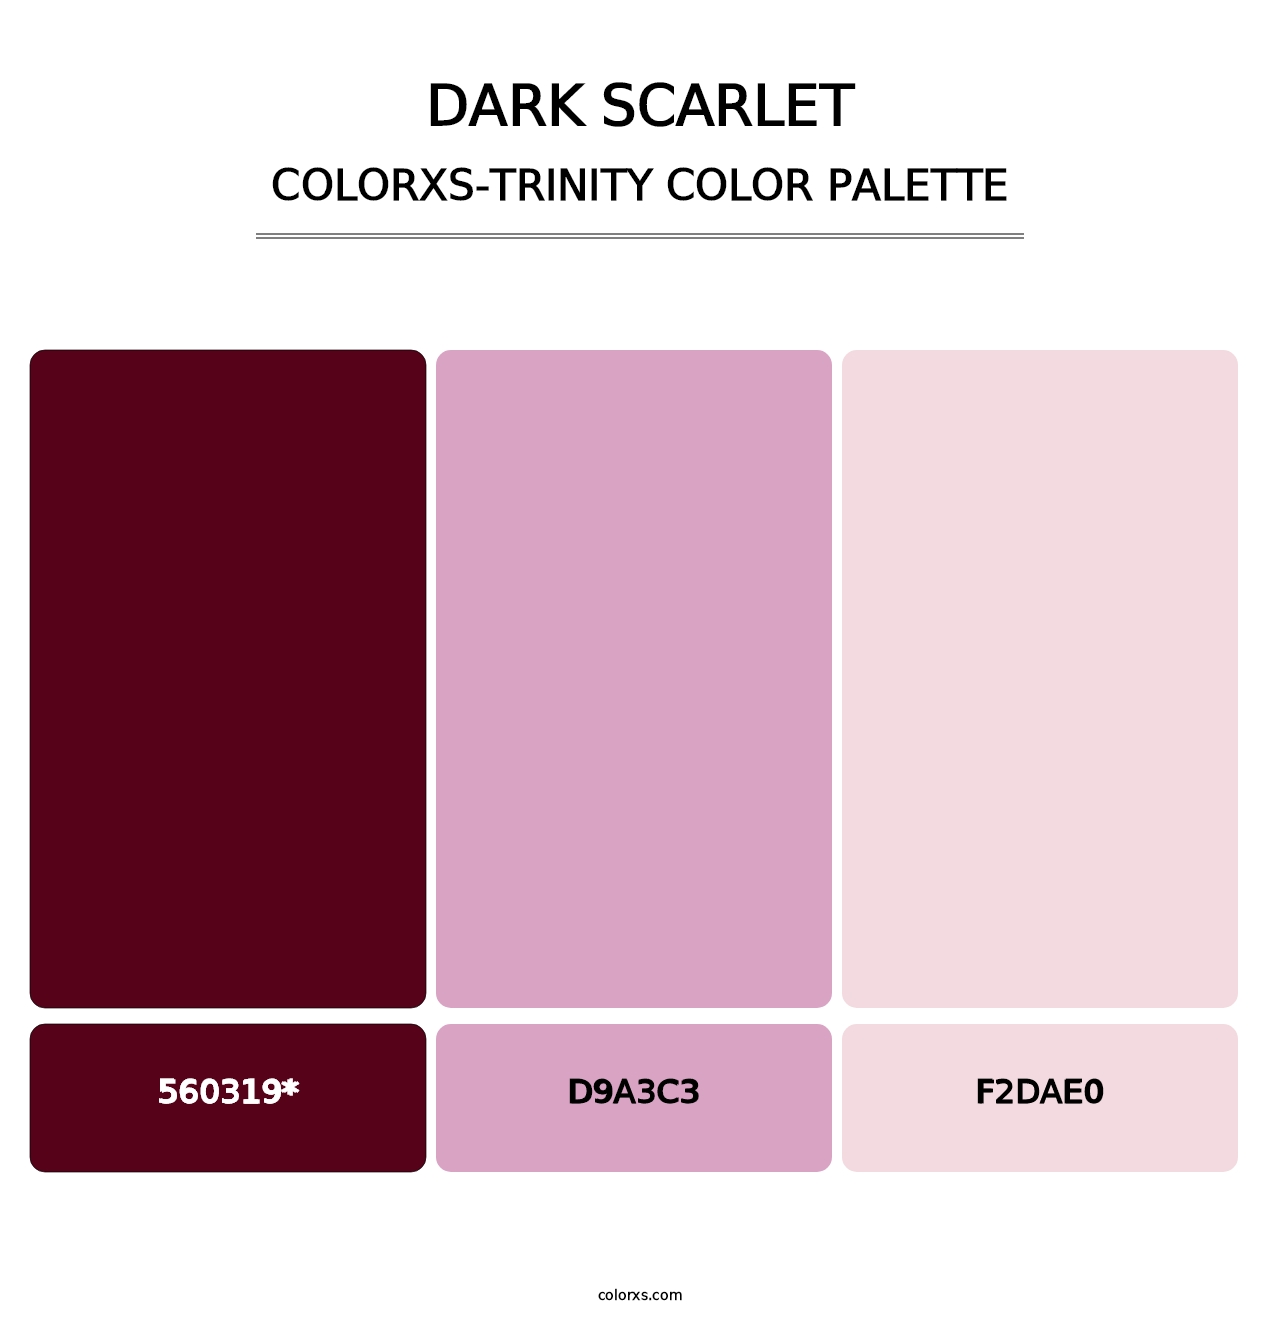 Dark Scarlet - Colorxs Trinity Palette